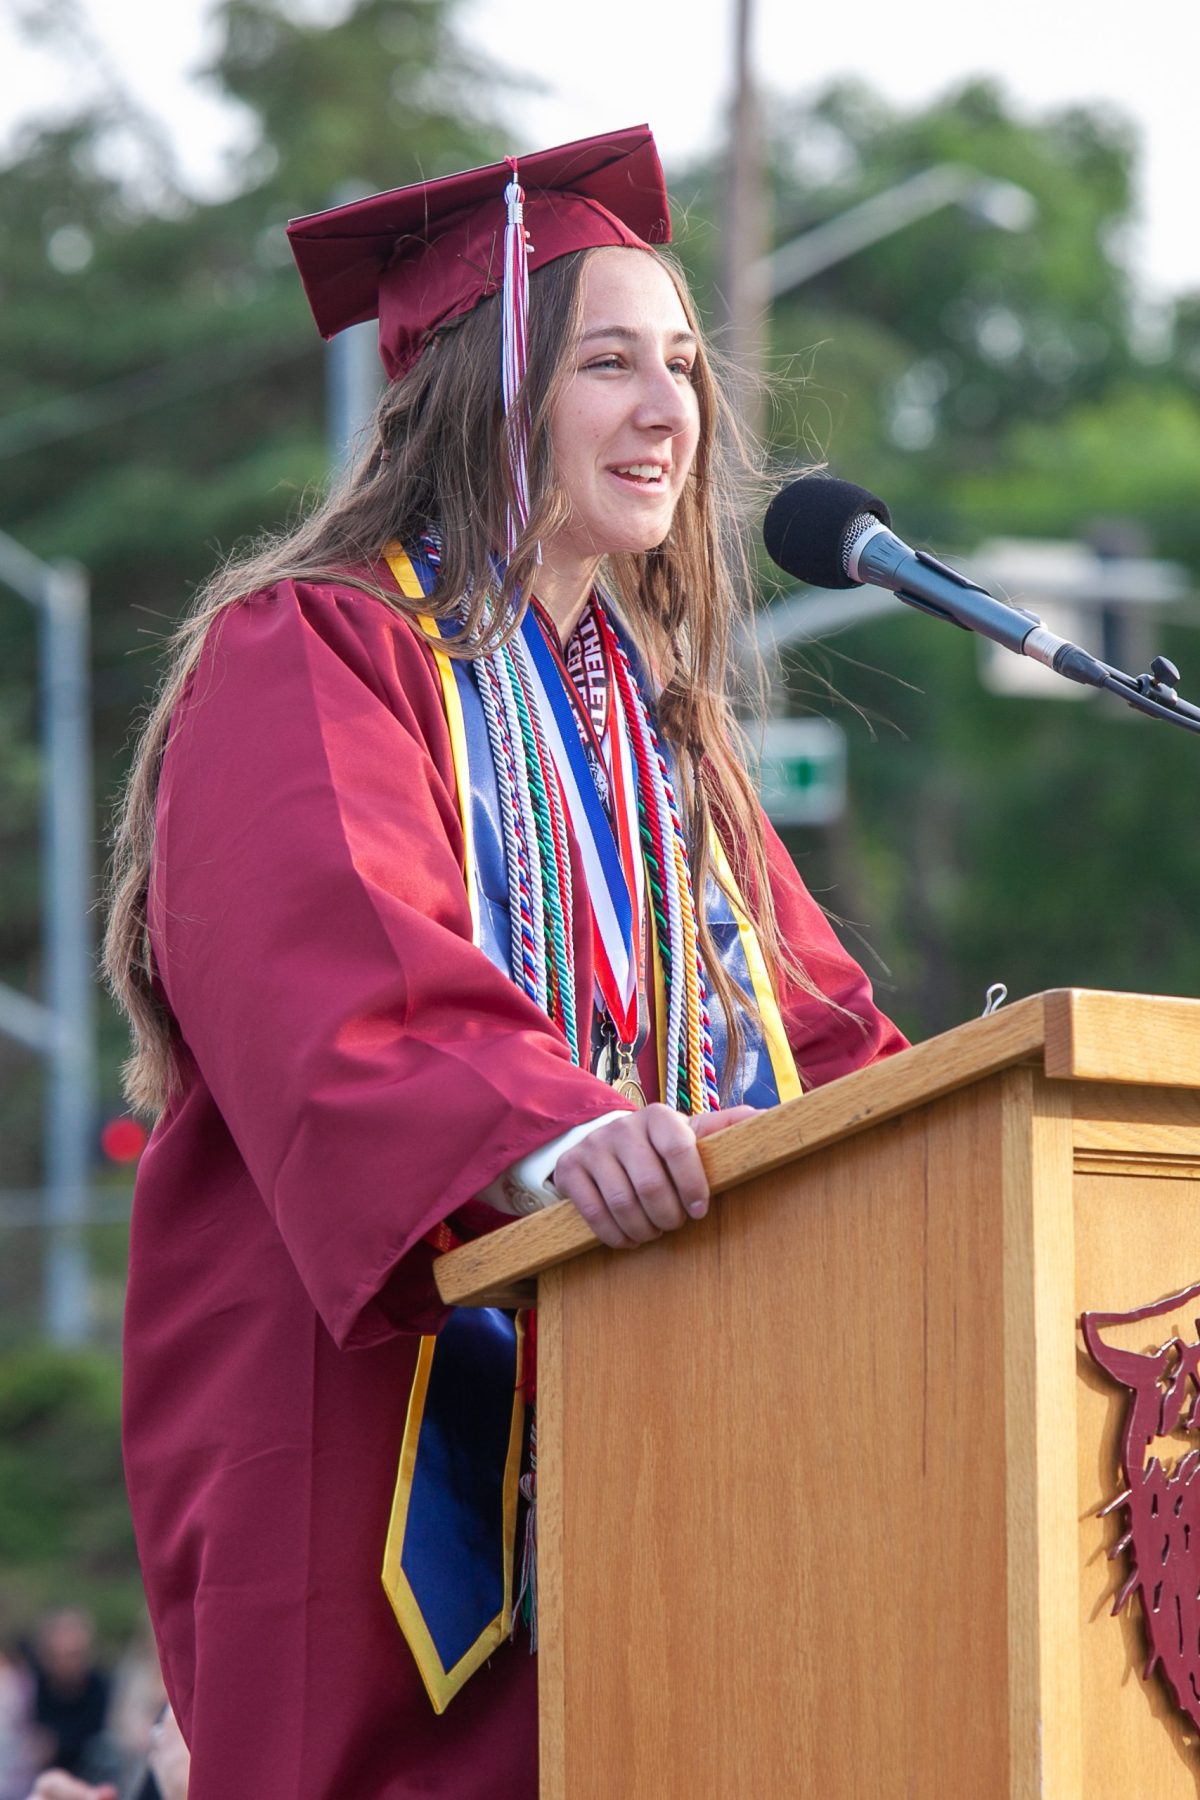 Paso Robles High School graduation honors achievements and embraces